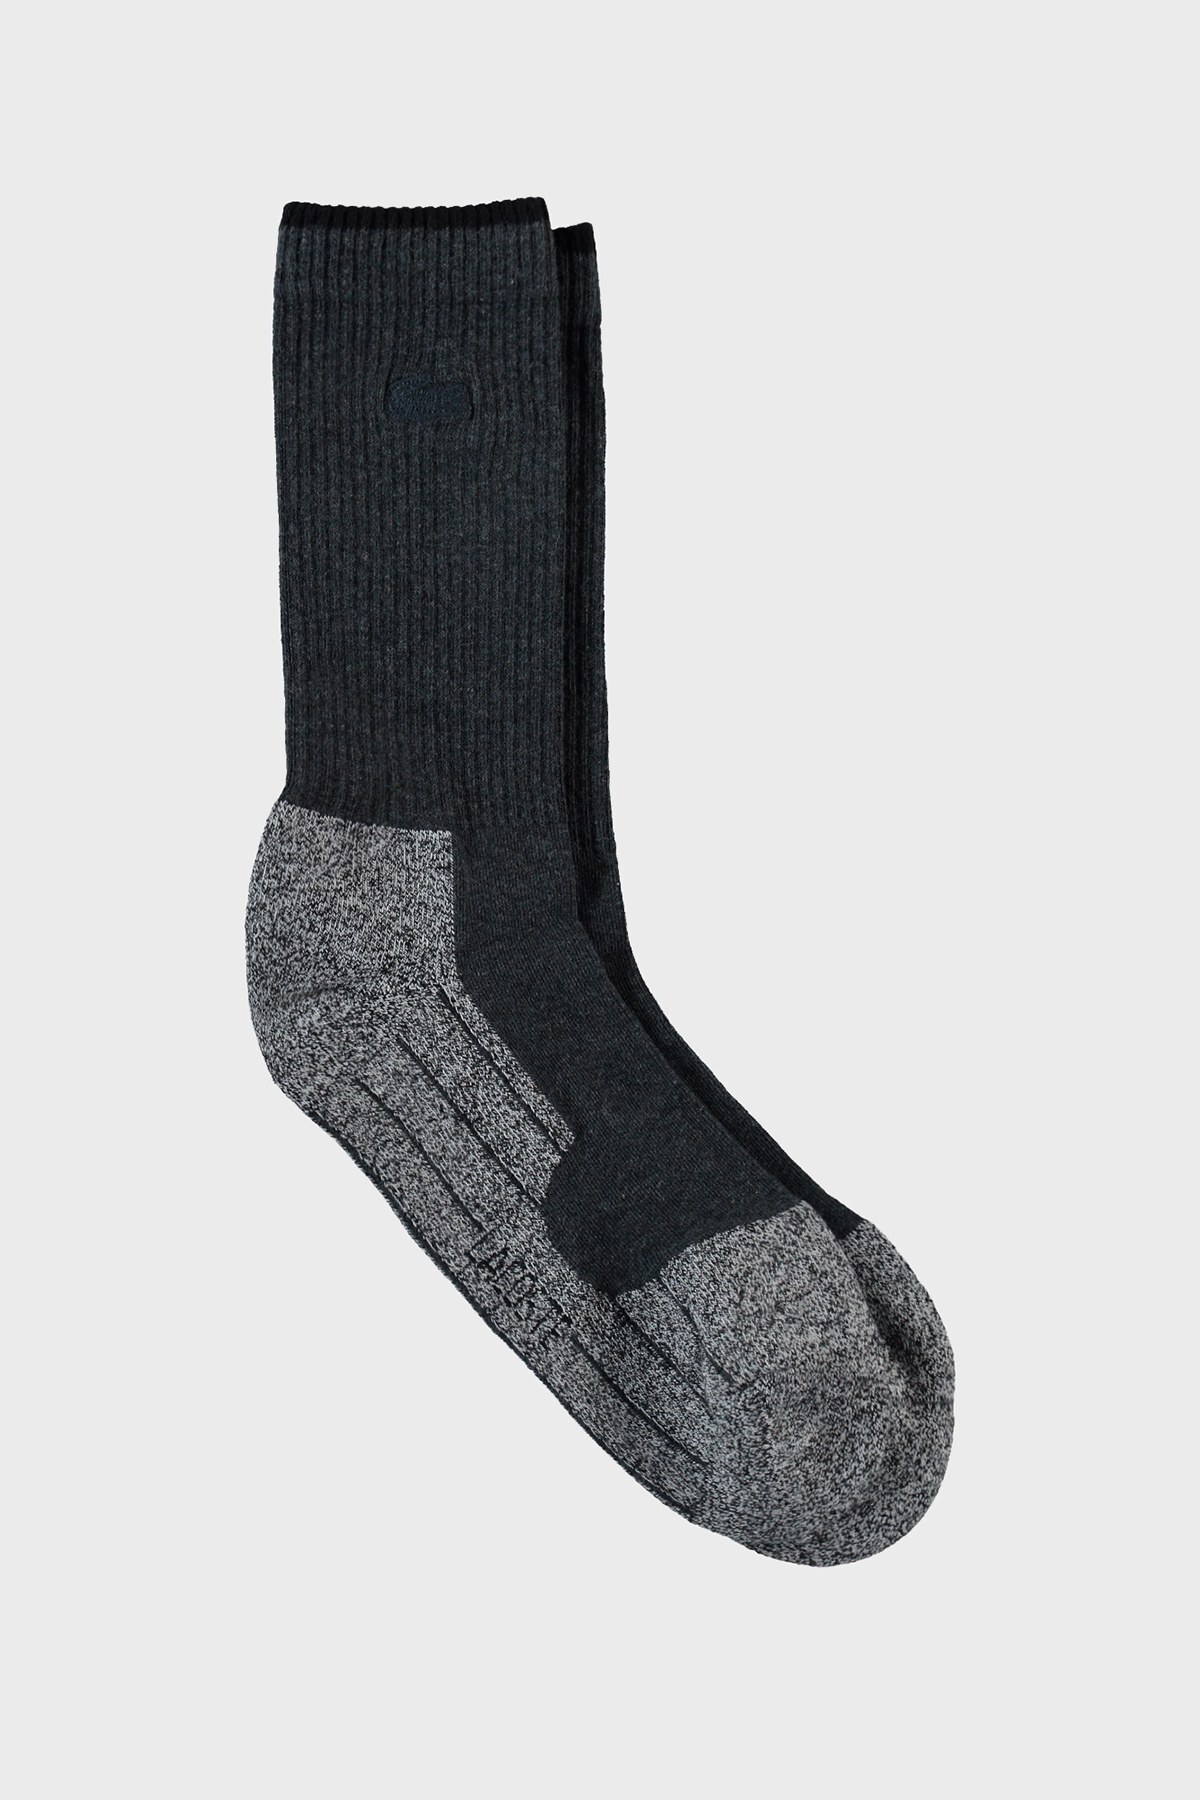 Lacoste Renk Bloklu Pamuklu Erkek Çorap RA2213 13G SİYAH